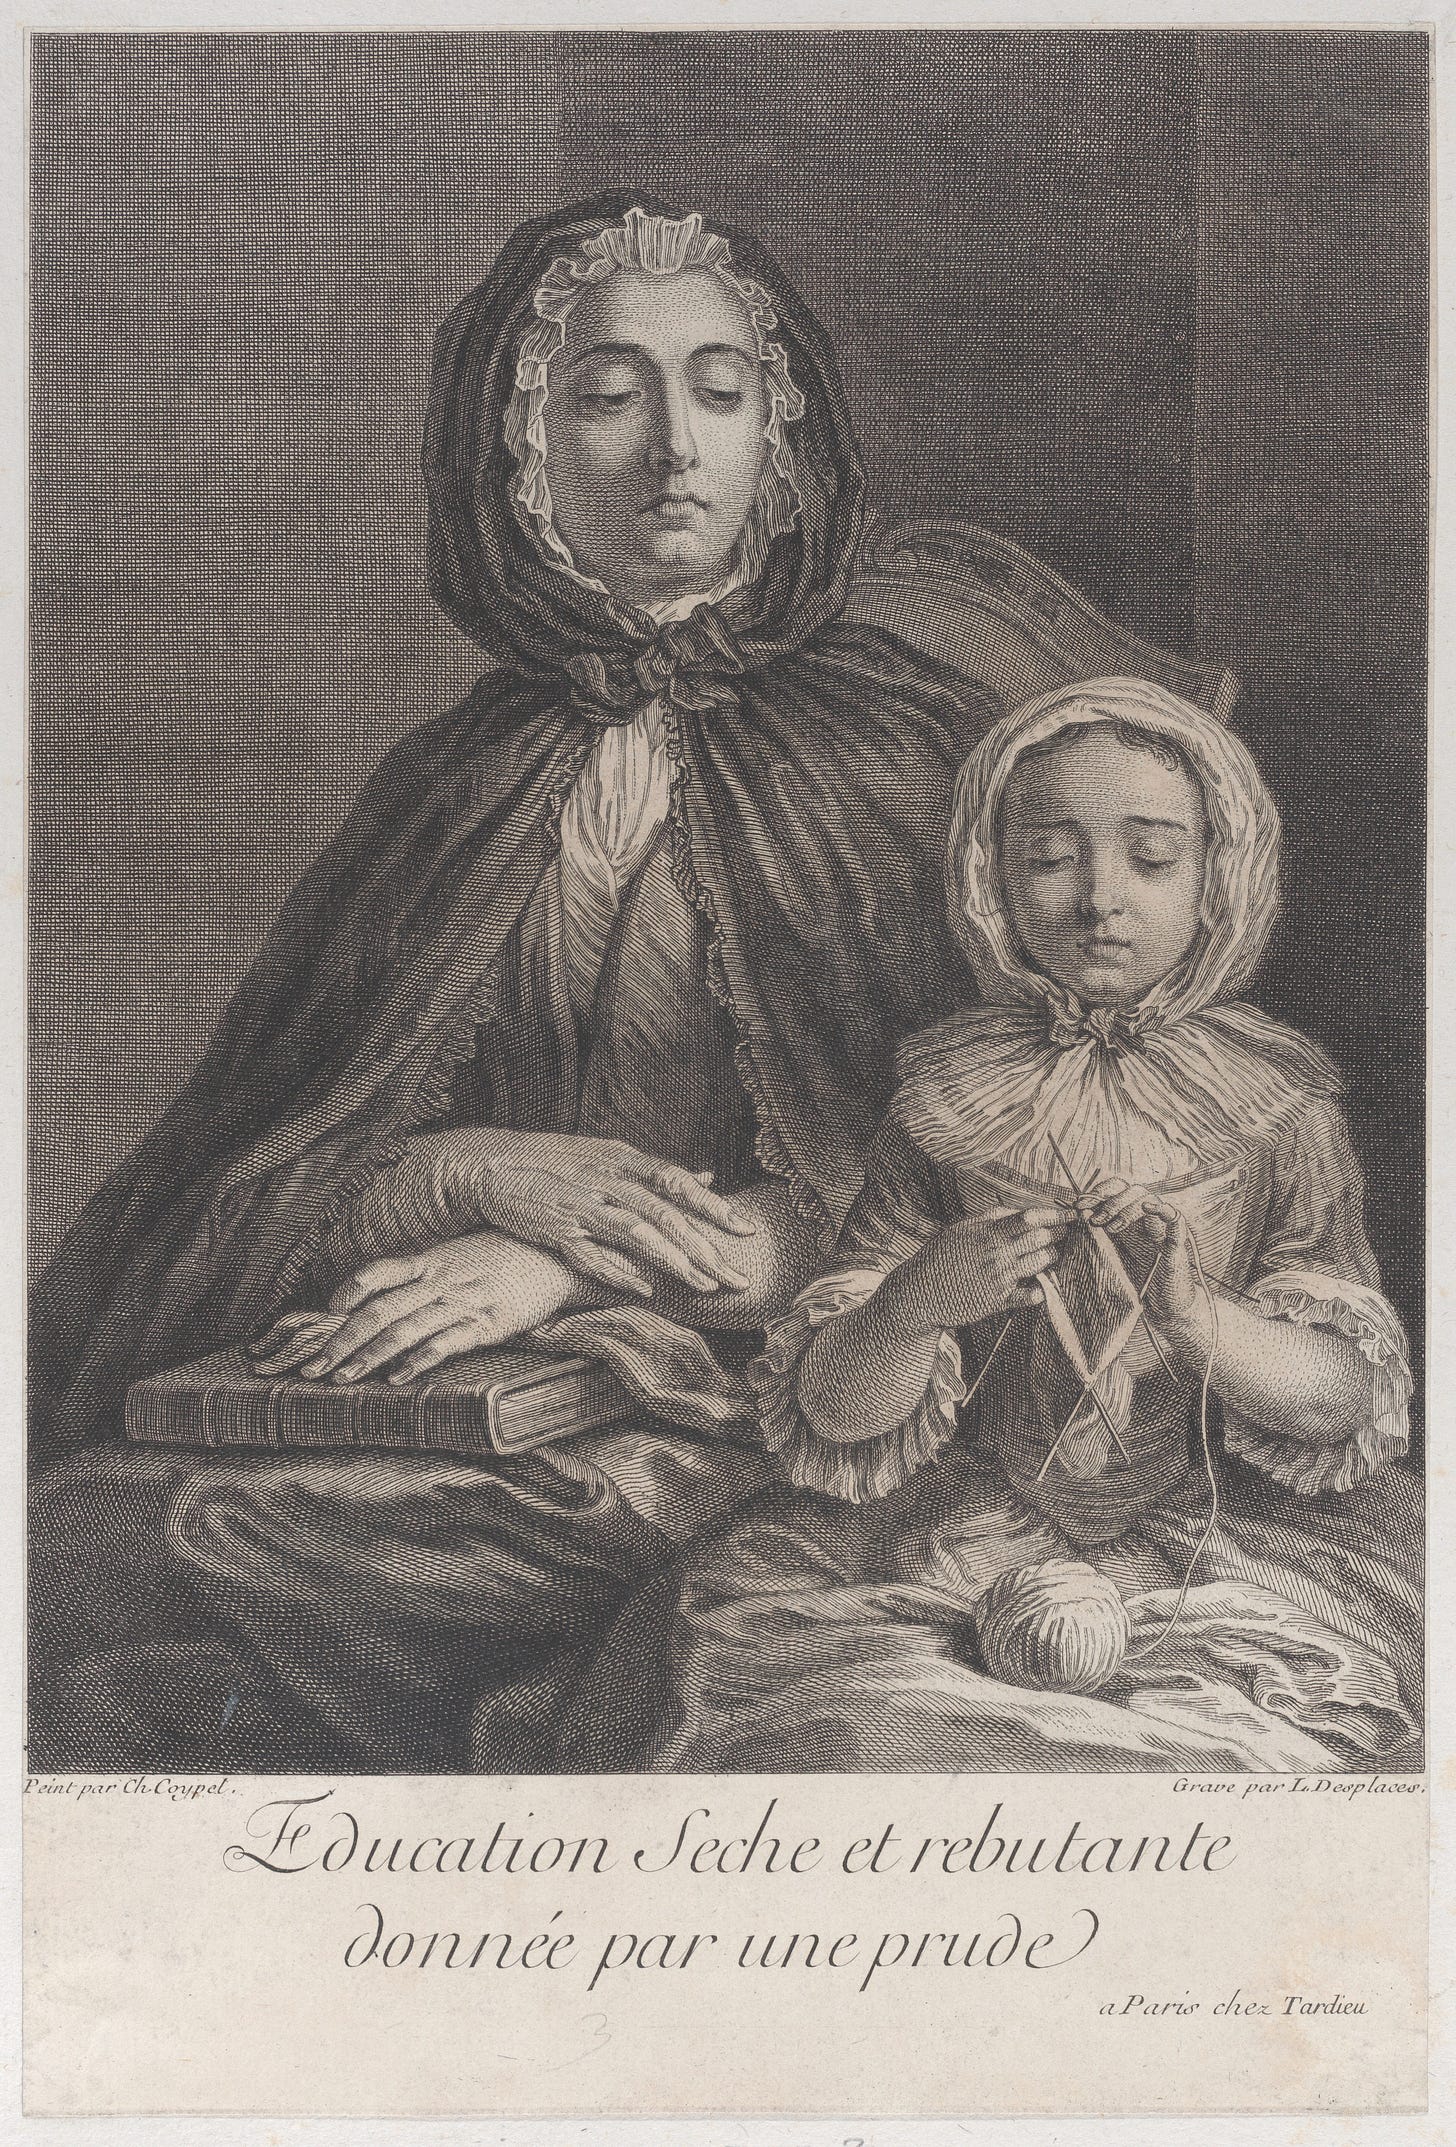 A young girl knits while an older woman looks on. "Education seche et rebutante donnée par un prude" is written in script.